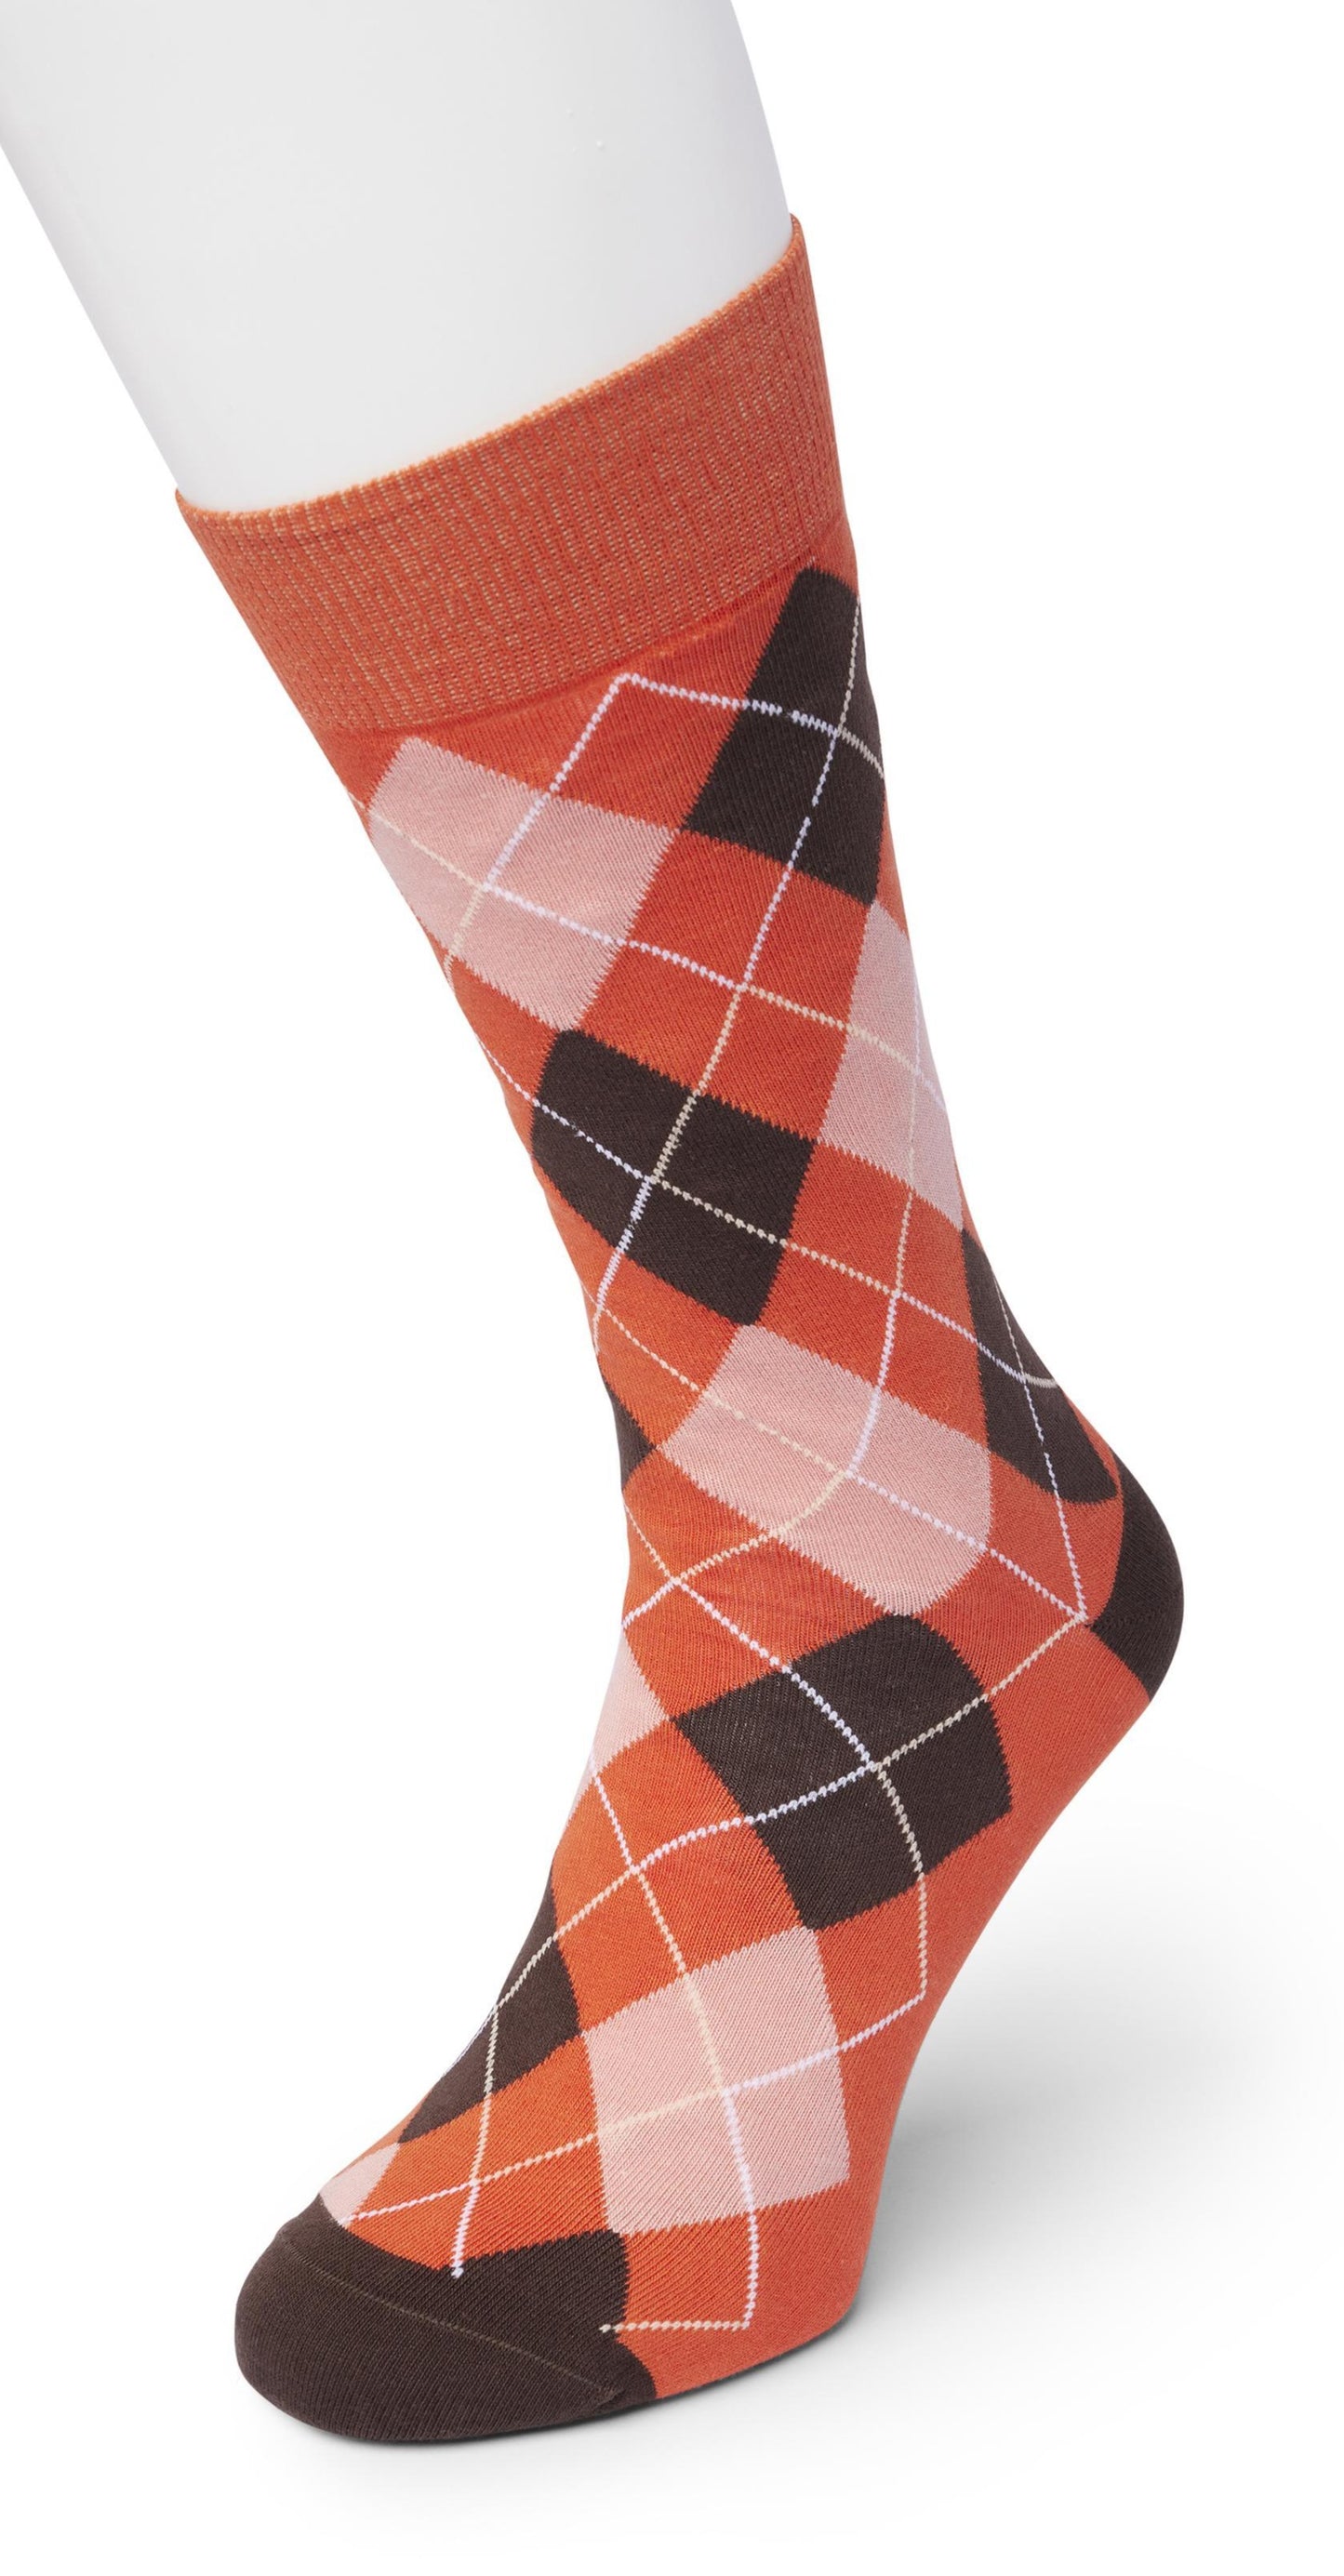 Bonnie Doon BP212113 Argyle Sock - Men's orange, brown and pale pink cotton ankle socks with a golf style diamond argyle tartan check pattern.